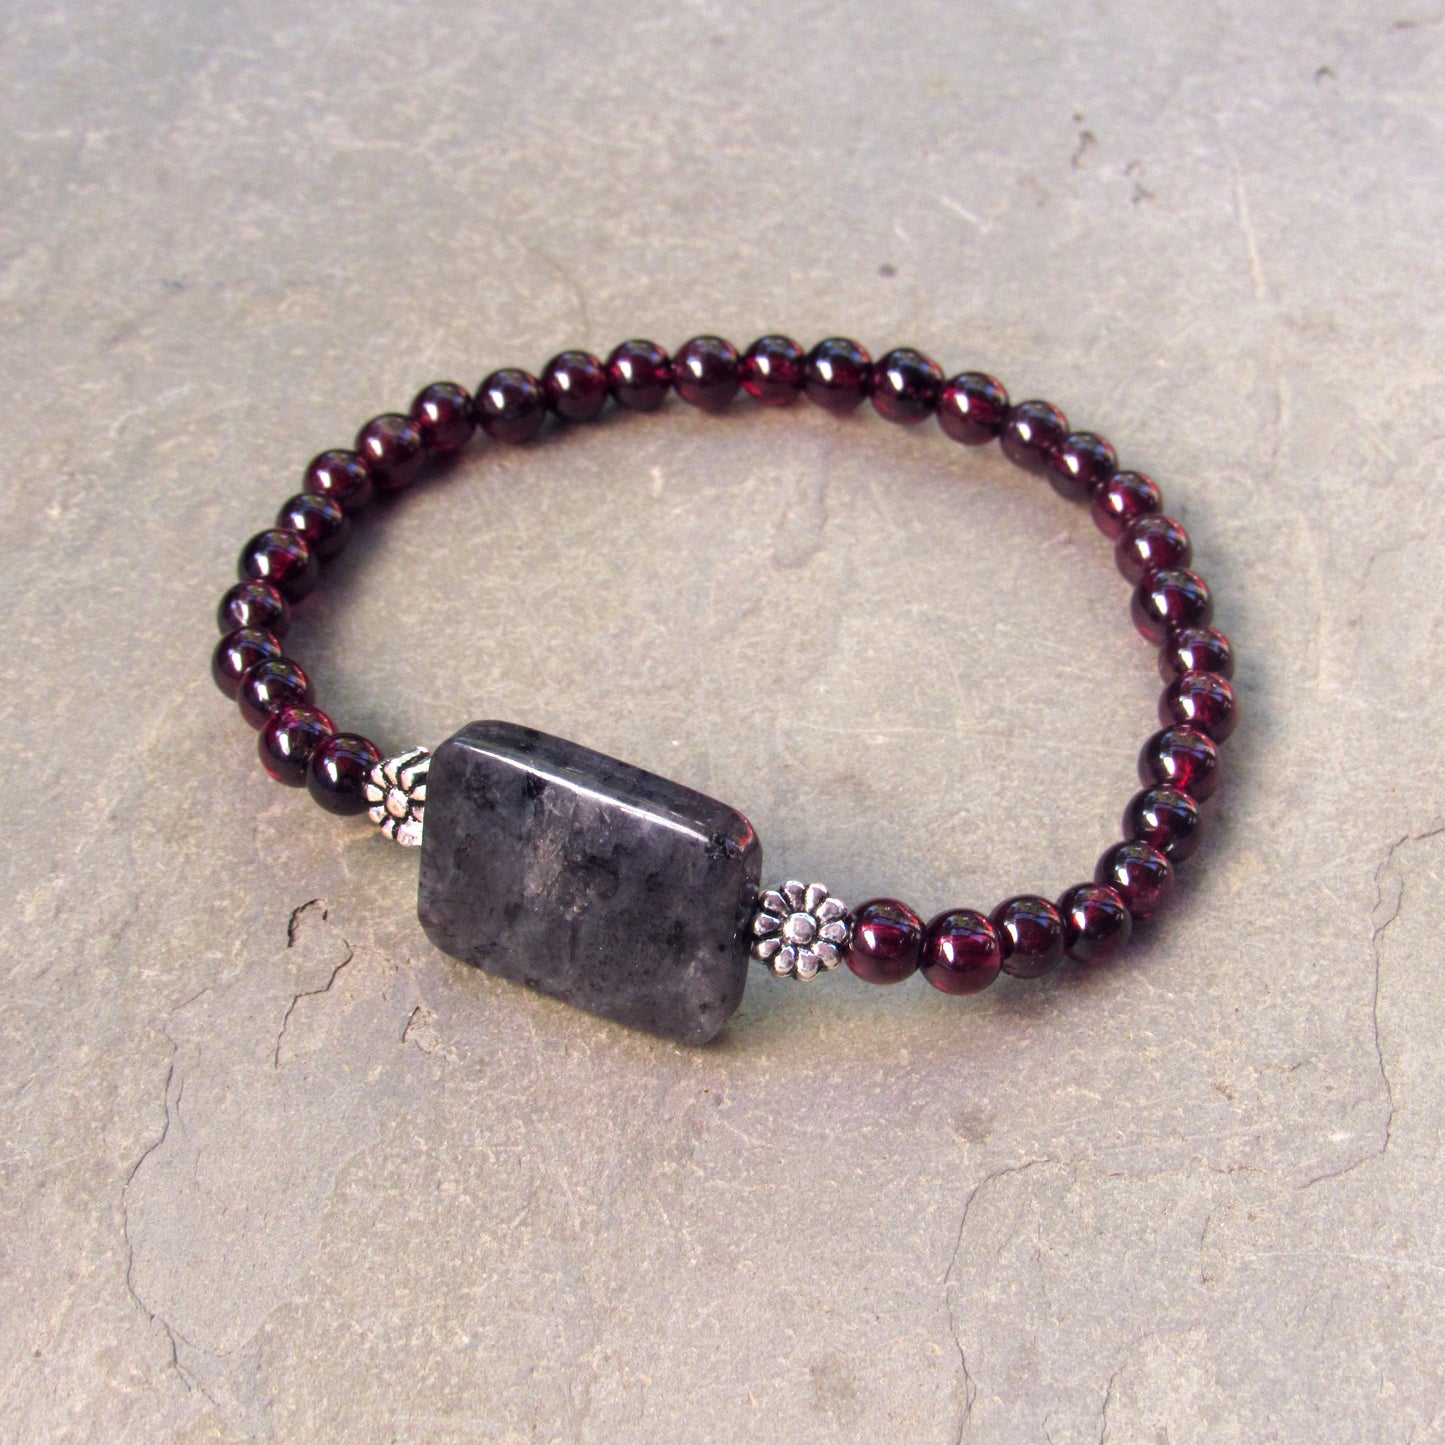 Garnet and Black Labradorite Gemstone bracelets with Sterling silver